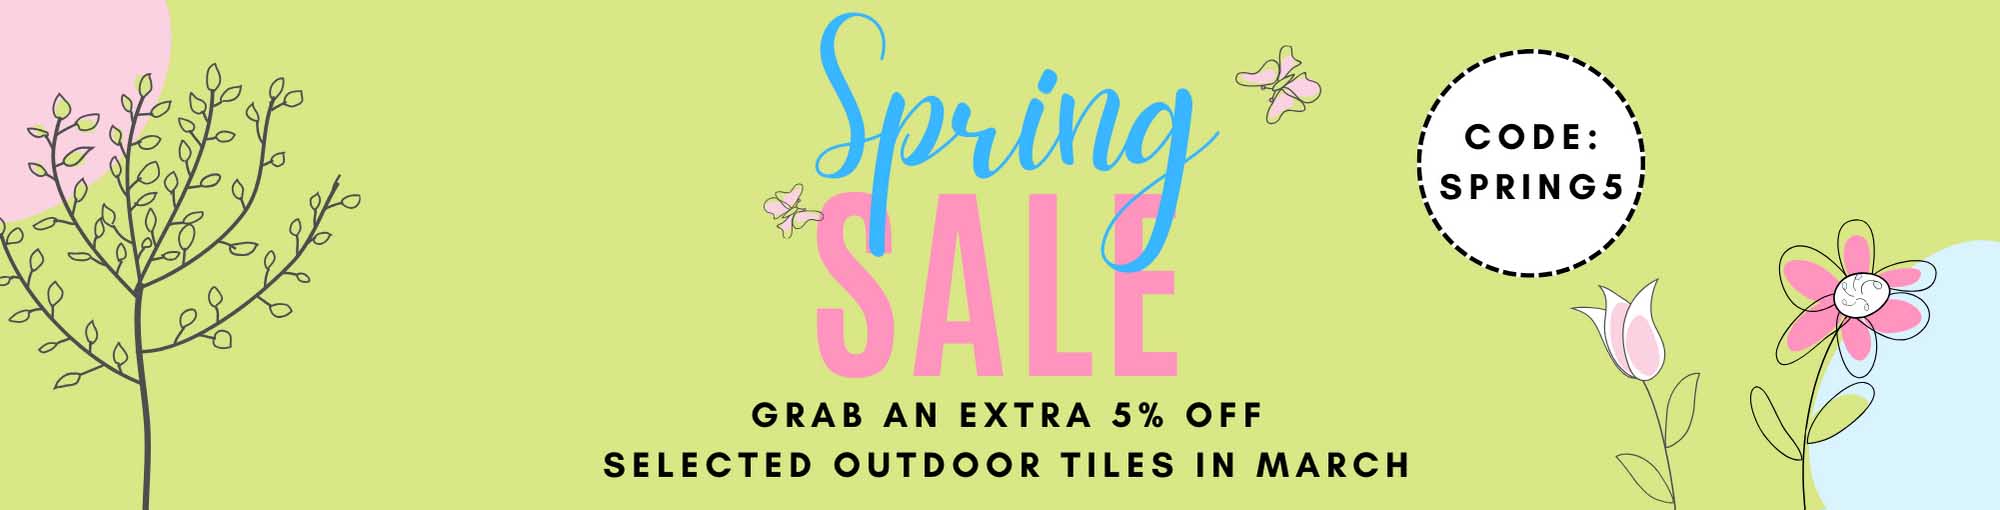 Spring Outdoor Tiles Sale